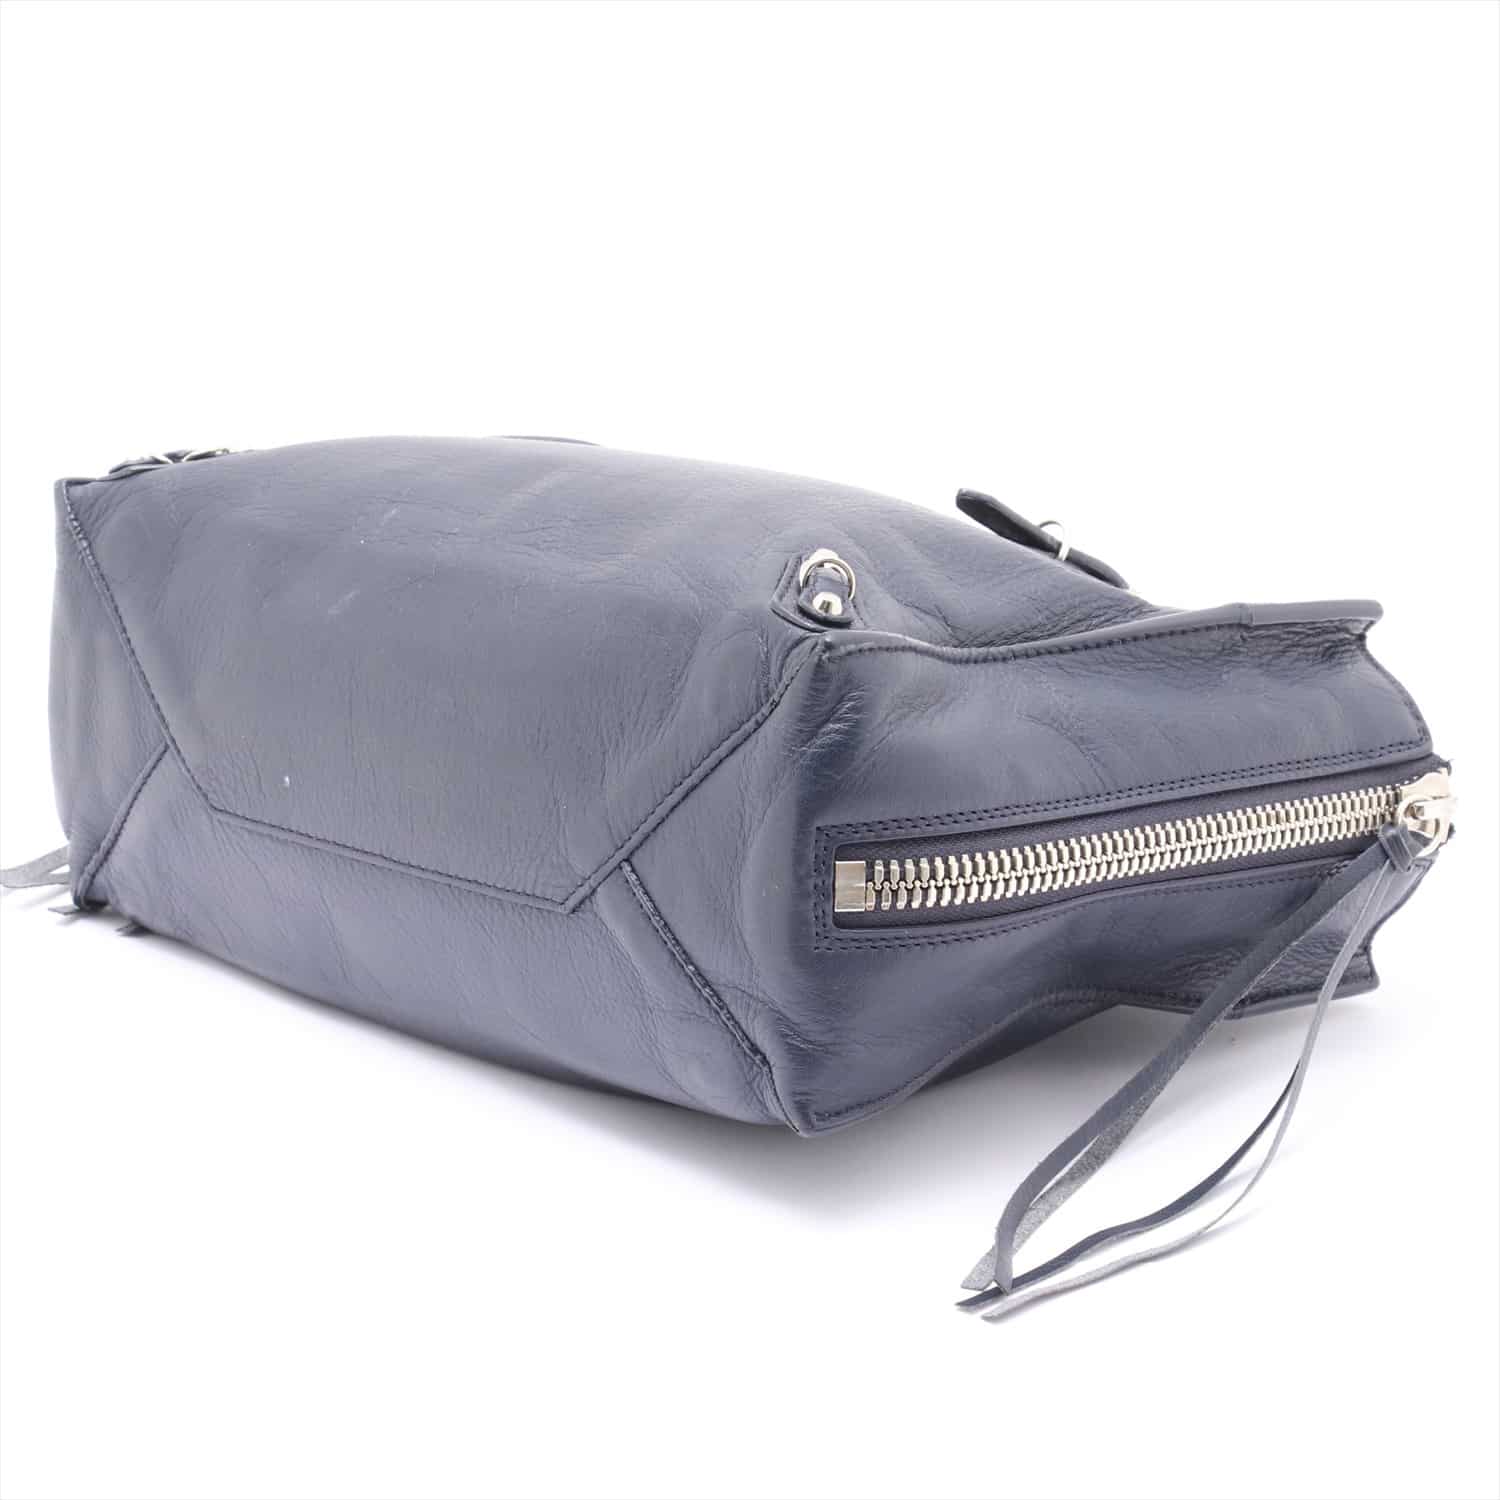 Balenciaga Papier Mini Leather 2way handbag Navy blue 370926